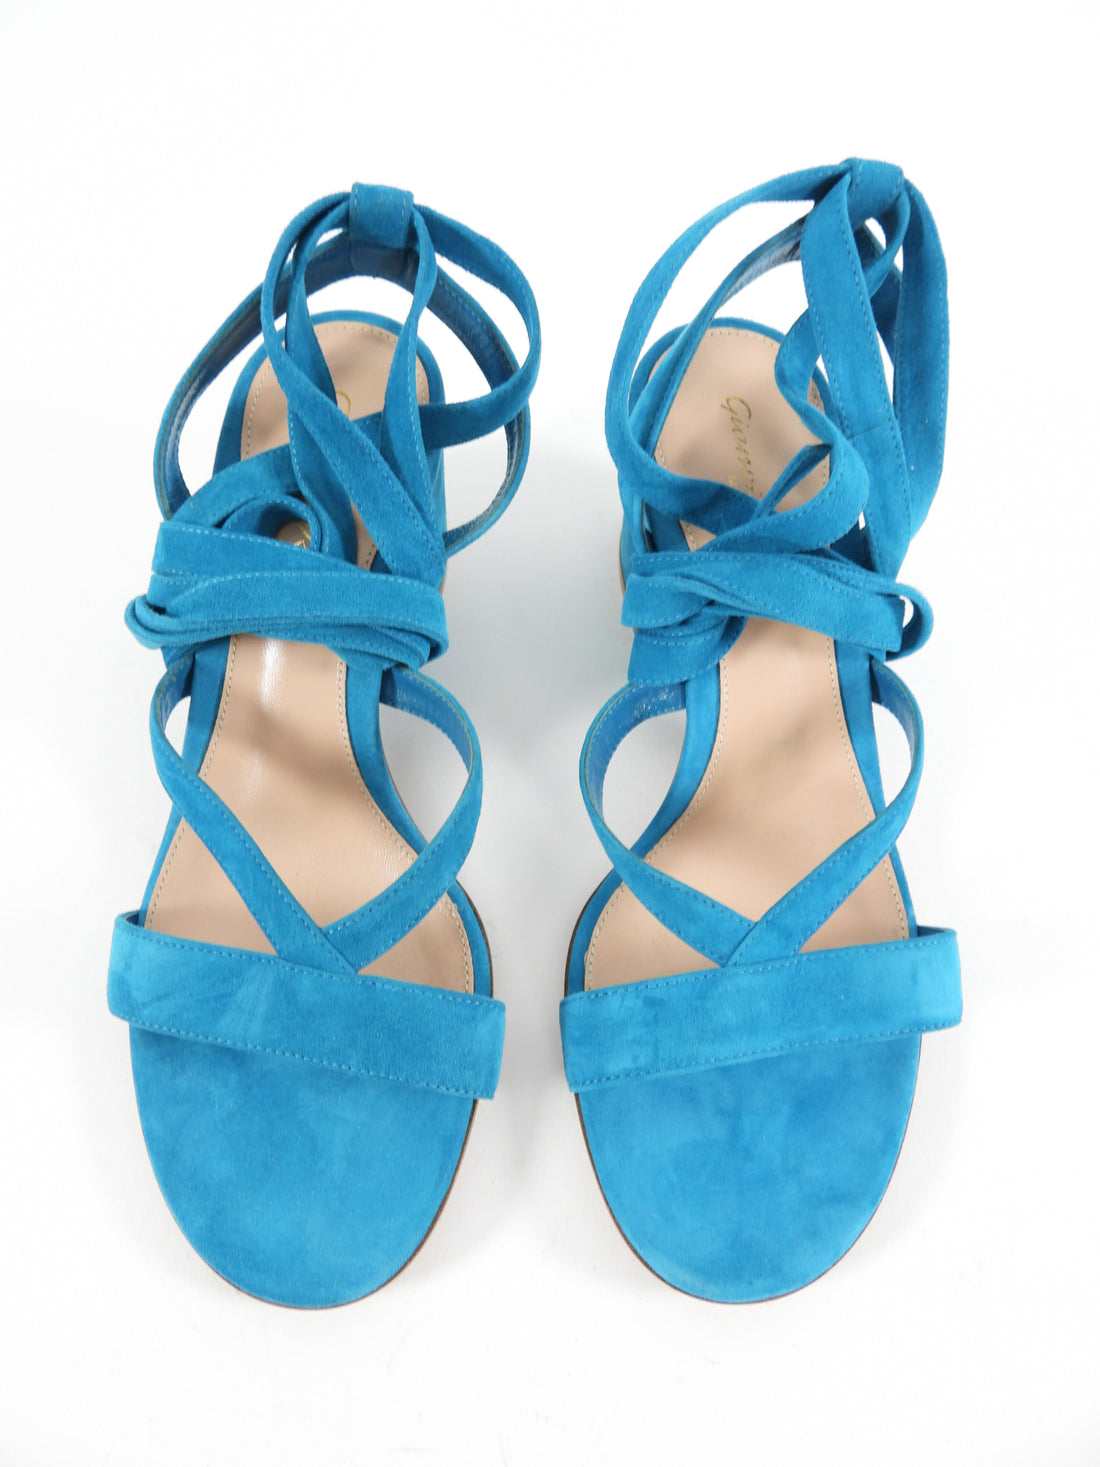 Gianvito Rossi Turquoise Blue Suede Sandals - 36.5